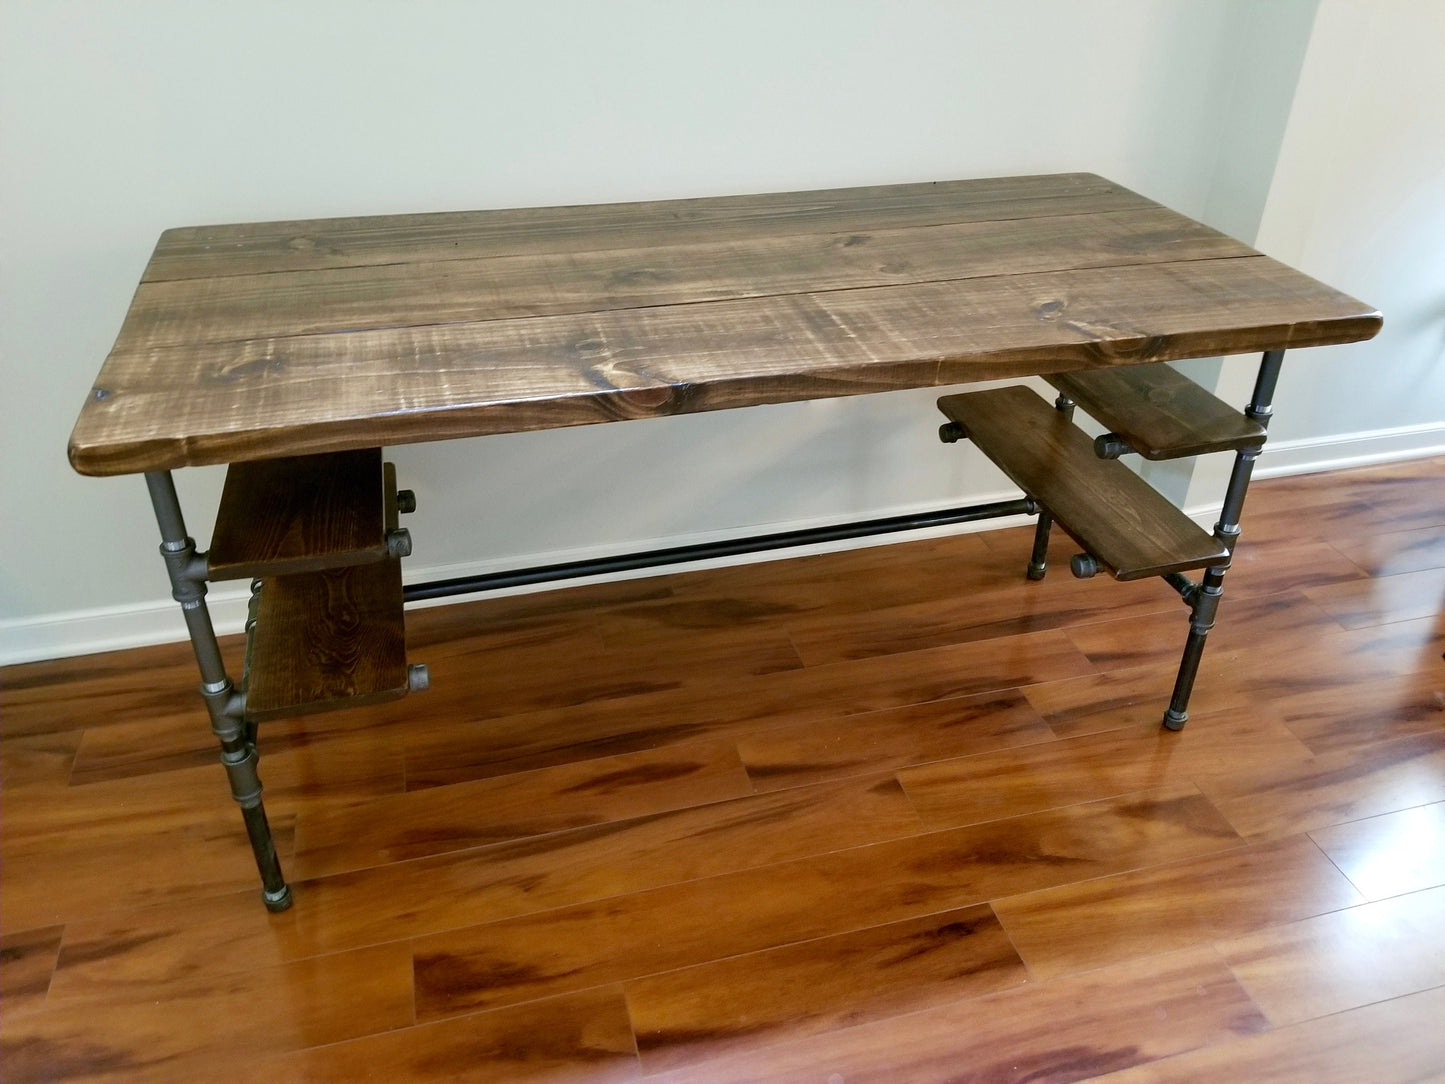 Steel and Wood Desk - Office Iron Pipe Desk with 4 Desk Shelves  - Multiple Shelf